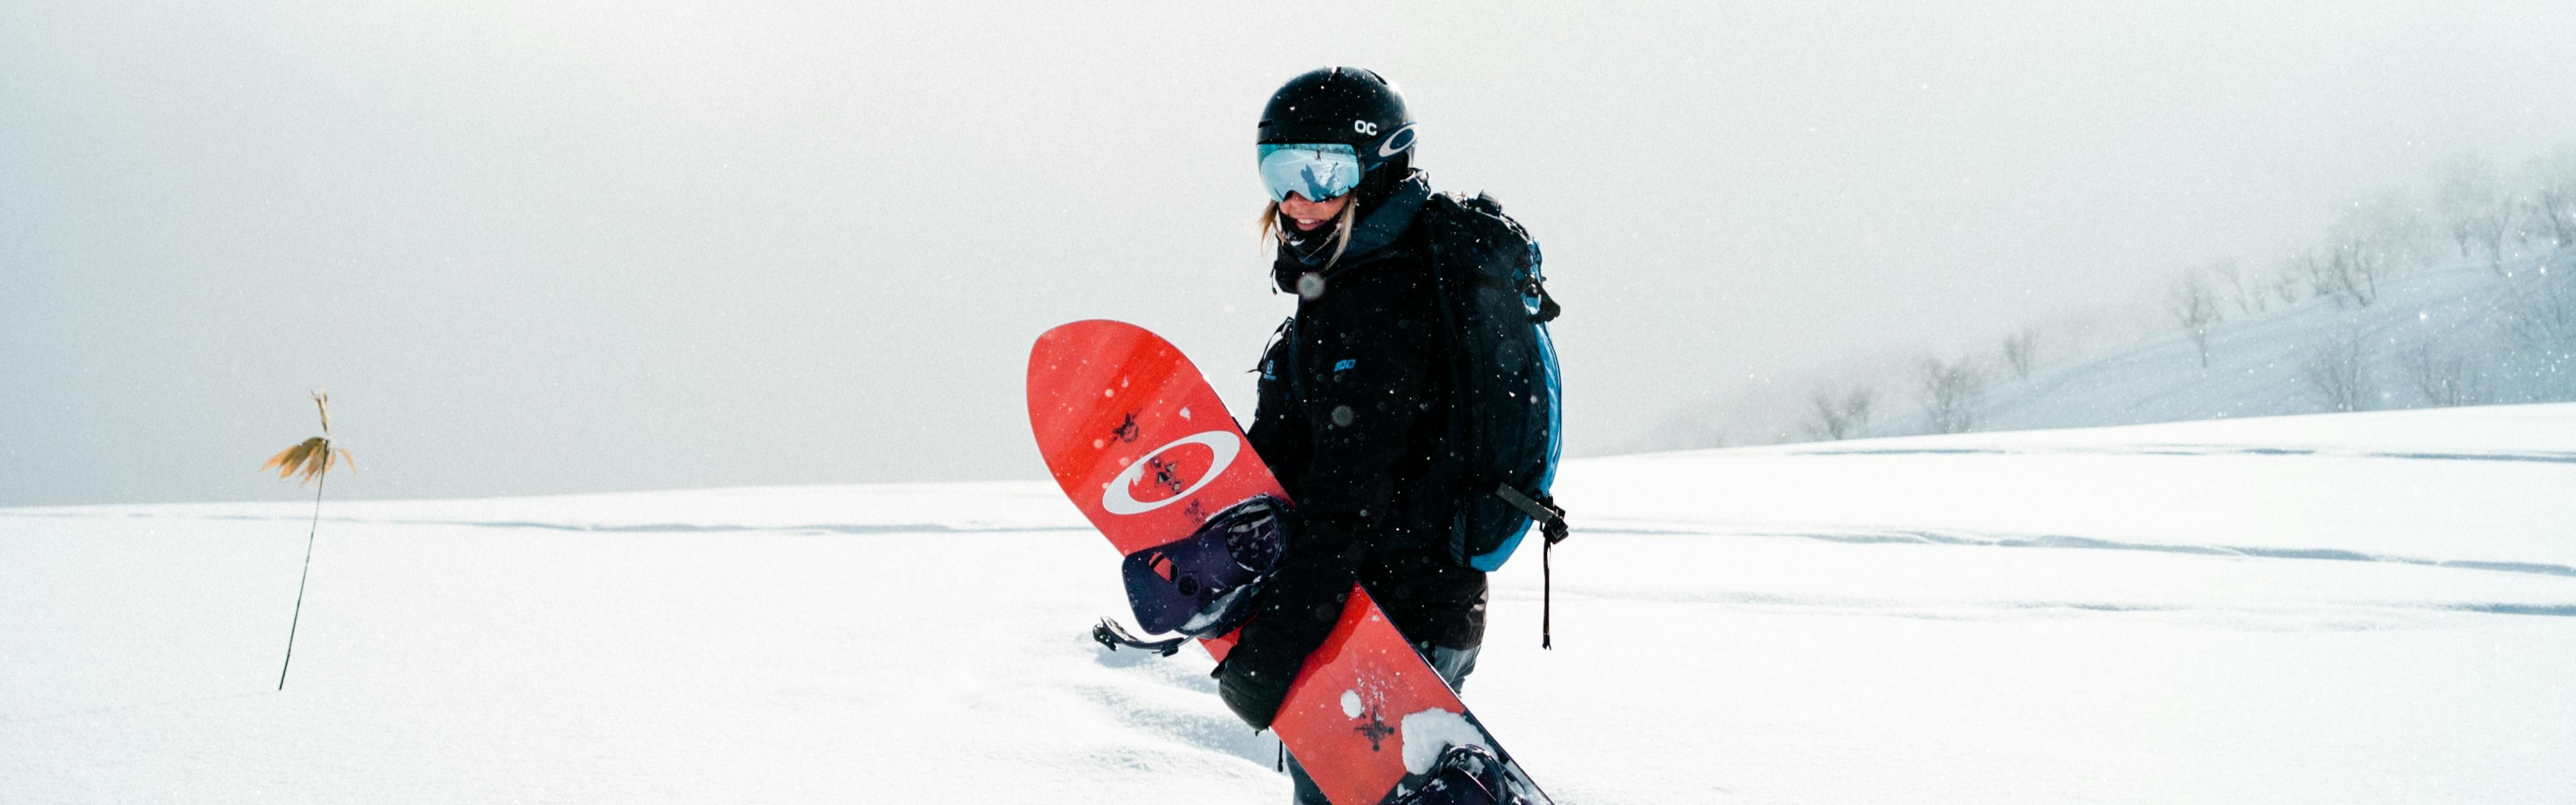 The Best Womens Snowboard Gear